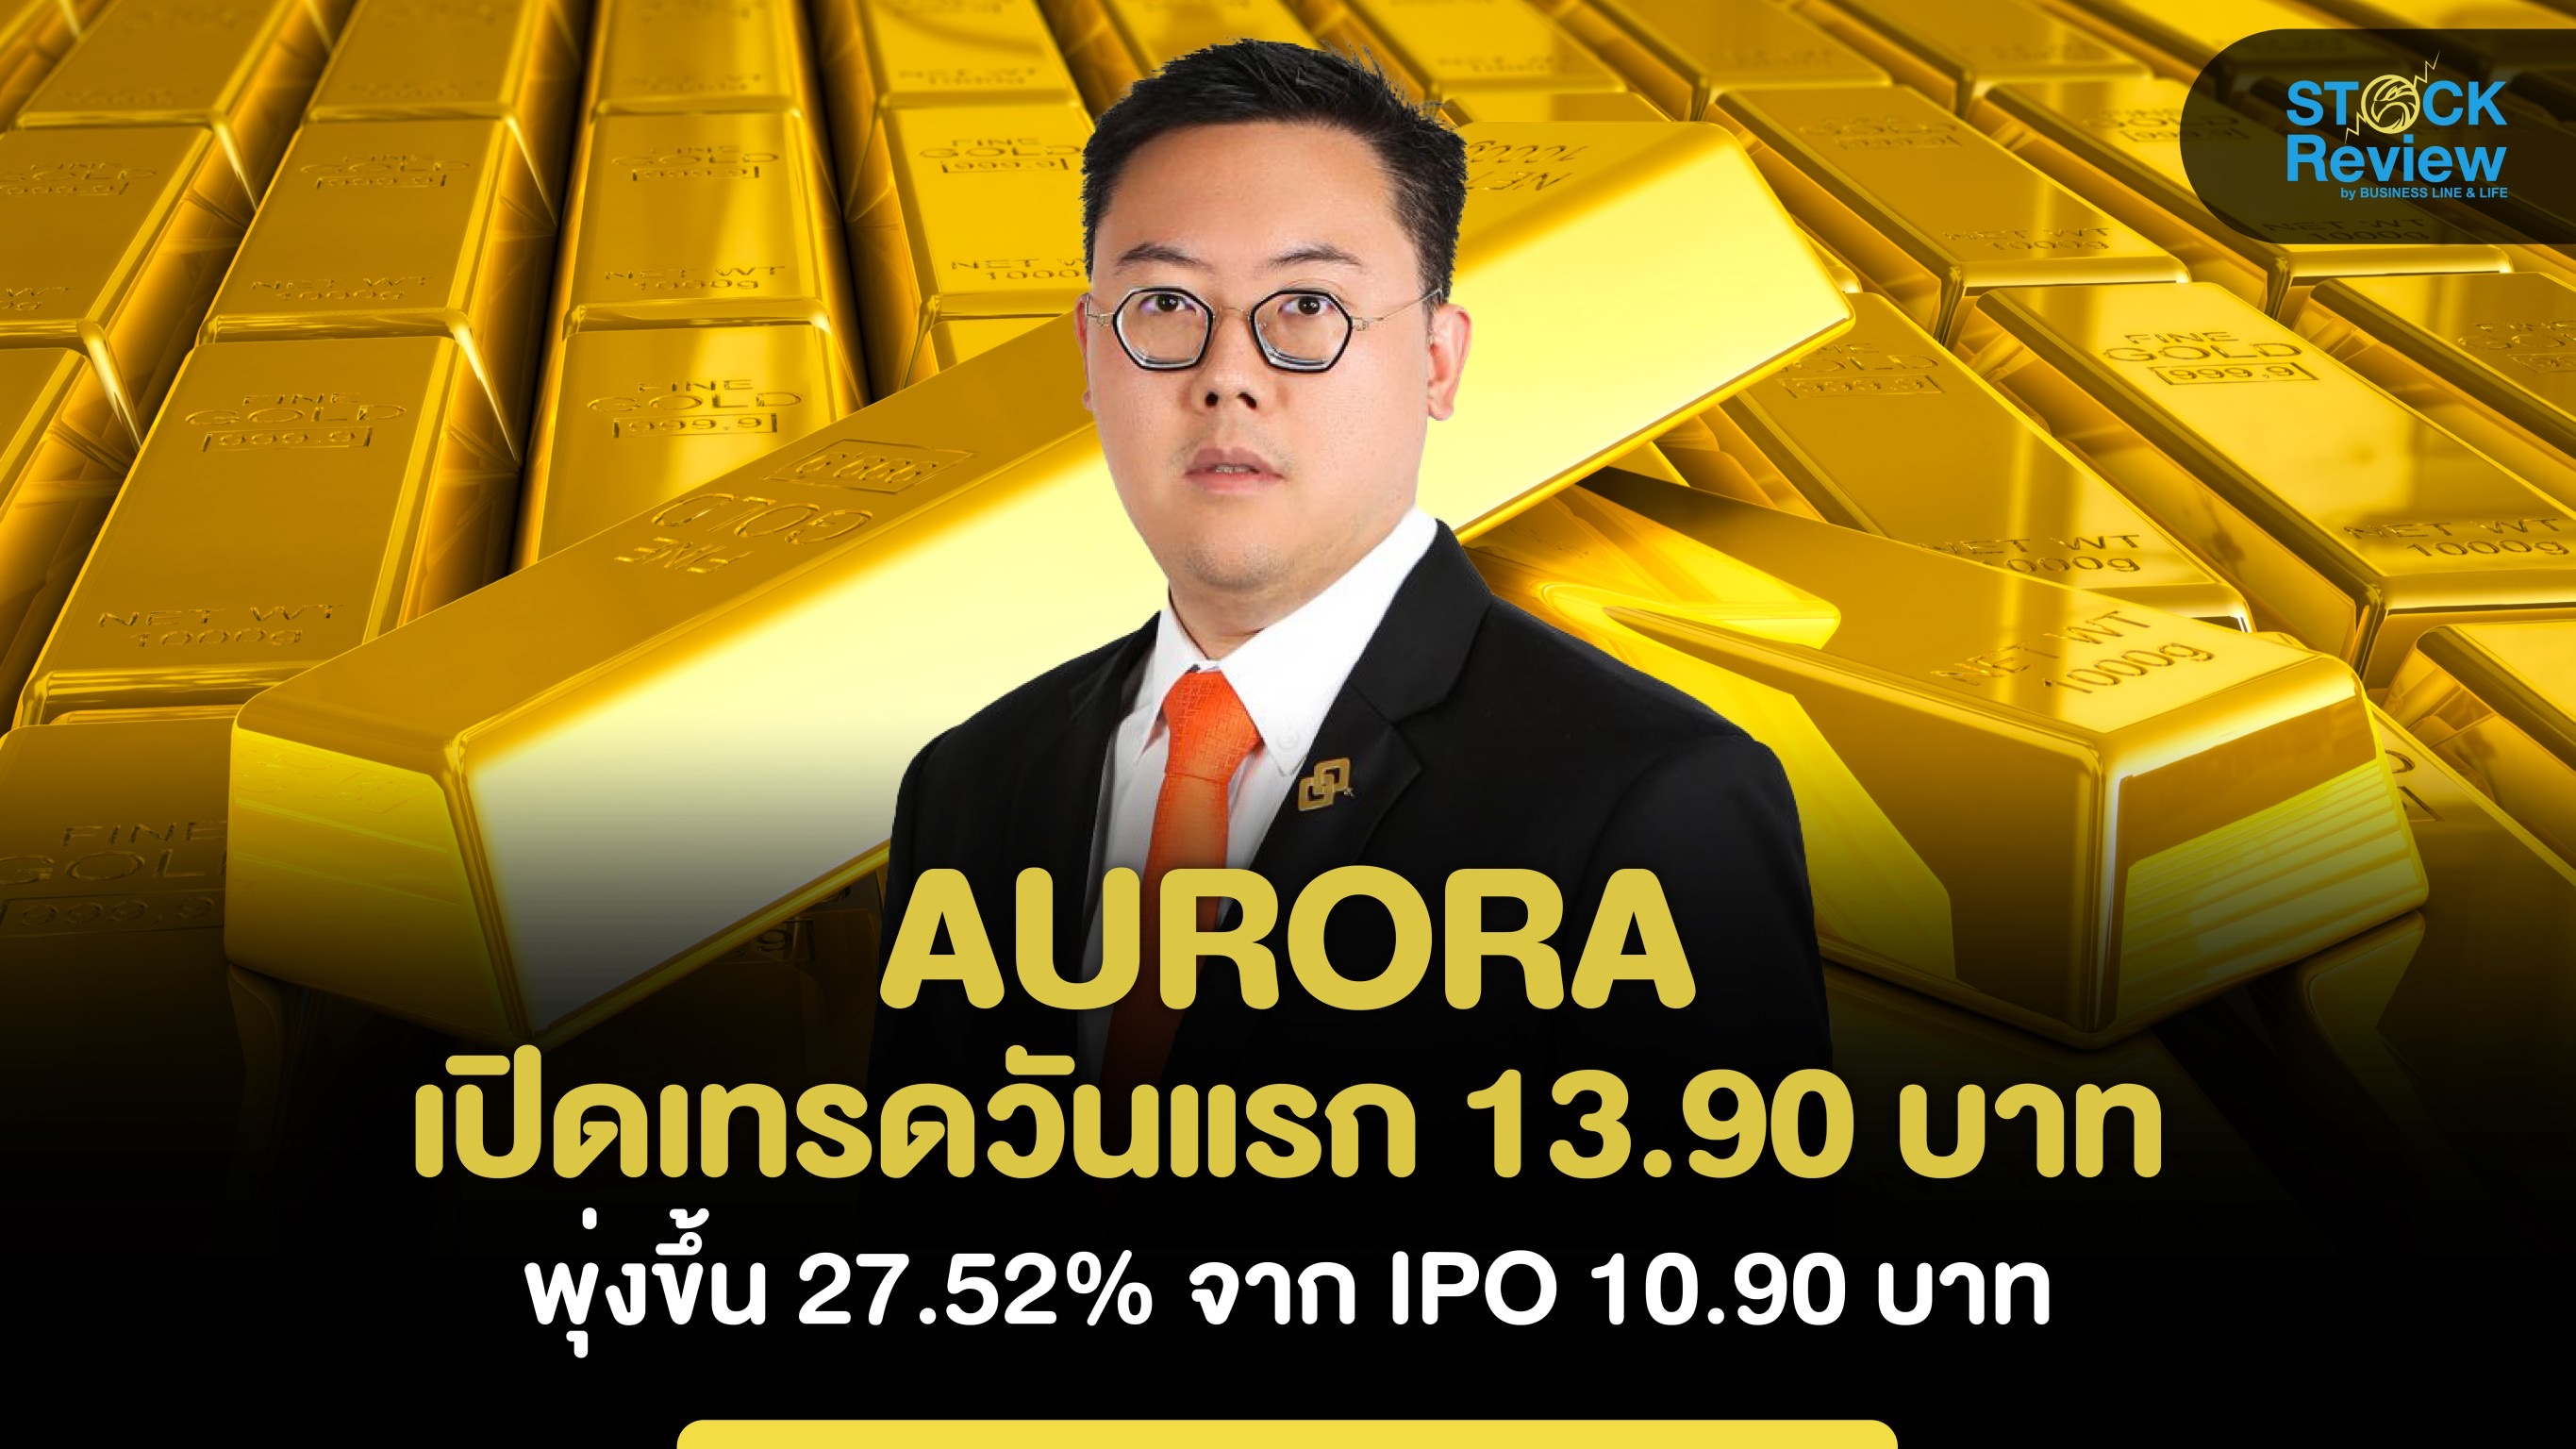 AURORA เปิดเทรดวันแรก 13.90 บาท พุ่งขึ้น 27.52% จาก IPO 10.90 บาท